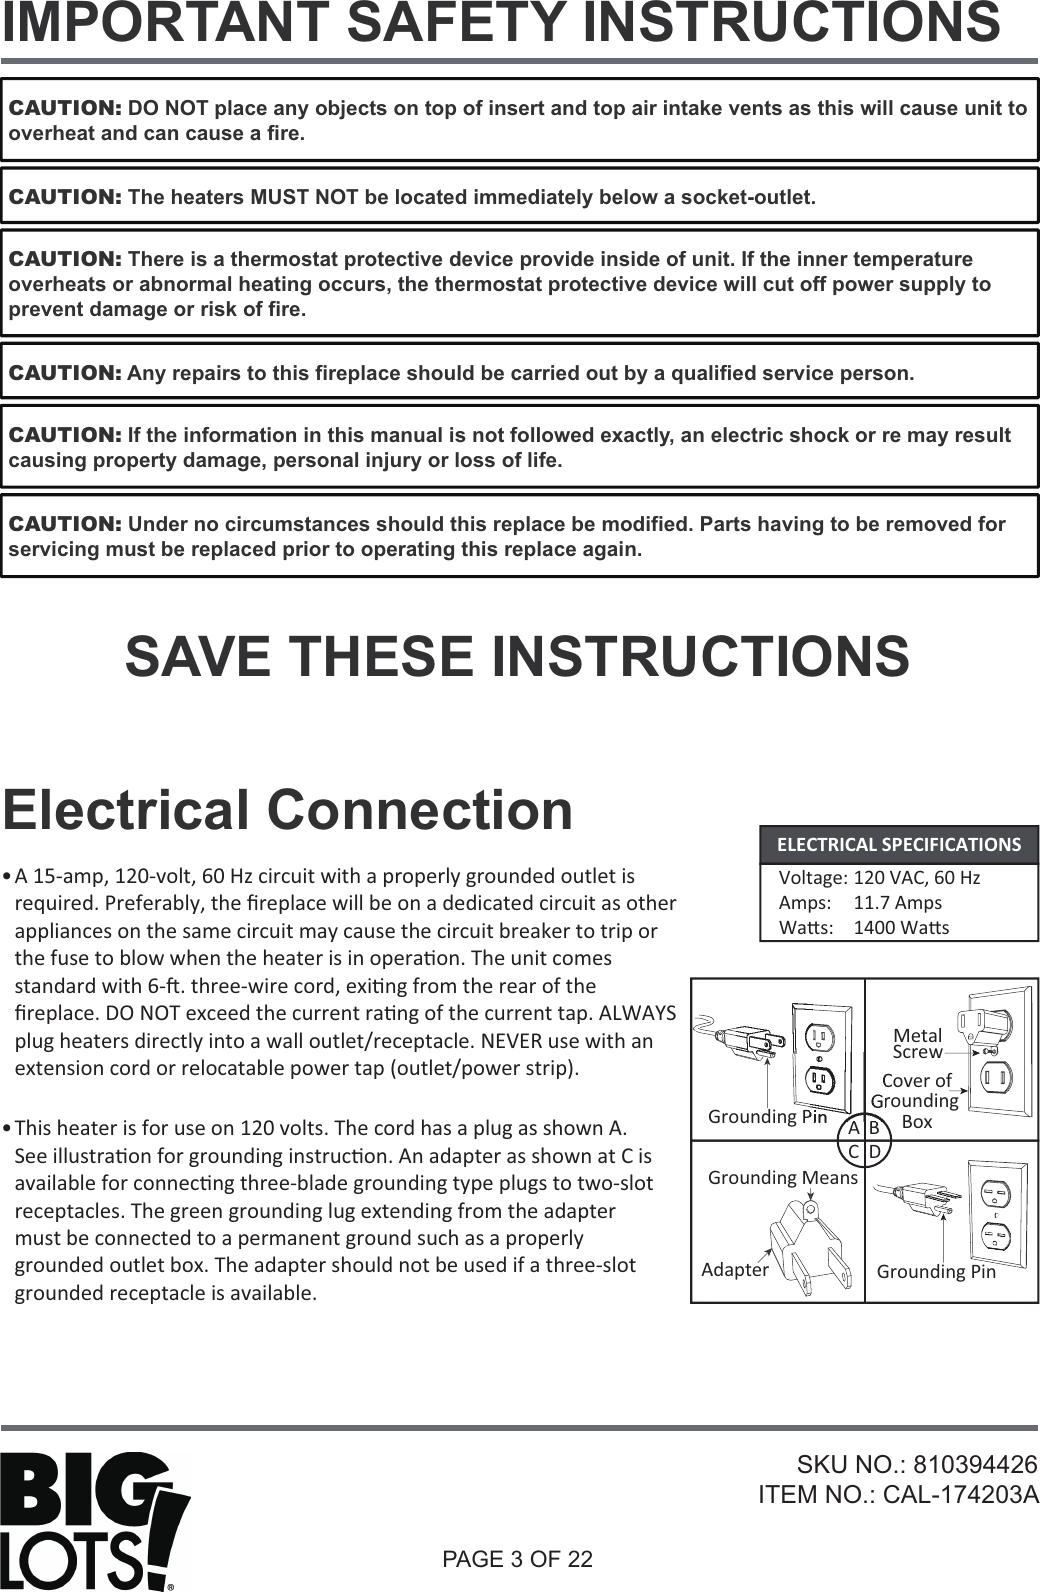 PAGE 3 OF 22IMPORTANT SAFETY INSTRUCTIONSSKU NO.: 810394426ITEM NO.: CAL-174203AElectrical ConnectionA 15-amp, 120-volt, 60 Hz circuit with a properly grounded outlet is ƌĞƋƵŝƌĞĚ͘WƌĞĨĞƌĂďůǇ͕ƚŚĞĮƌĞƉůĂĐĞǁŝůůďĞŽŶĂĚĞĚŝĐĂƚĞĚĐŝƌĐƵŝƚĂƐŽƚŚĞƌappliances on the same circuit may cause the circuit breaker to trip or ƚŚĞĨƵƐĞƚŽďůŽǁǁŚĞŶƚŚĞŚĞĂƚĞƌŝƐŝŶŽƉĞƌĂƟŽŶ͘dŚĞƵŶŝƚĐŽŵĞƐƐƚĂŶĚĂƌĚǁŝƚŚϲͲŌ͘ƚŚƌĞĞͲǁŝƌĞĐŽƌĚ͕ĞǆŝƟŶŐĨƌŽŵƚŚĞƌĞĂƌŽĨƚŚĞĮƌĞƉůĂĐĞ͘KEKdĞǆĐĞĞĚƚŚĞĐƵƌƌĞŶƚƌĂƟŶŐŽĨƚŚĞĐƵƌƌĞŶƚƚĂƉ͘&gt;tz^ƉůƵŐŚĞĂƚĞƌƐĚŝƌĞĐƚůǇŝŶƚŽĂǁĂůůŽƵƚůĞƚͬƌĞĐĞƉƚĂĐůĞ͘EsZƵƐĞǁŝƚŚĂŶĞǆƚĞŶƐŝŽŶĐŽƌĚŽƌƌĞůŽĐĂƚĂďůĞƉŽǁĞƌƚĂƉ;ŽƵƚůĞƚͬƉŽǁĞƌƐƚƌŝƉͿ͘•dŚŝƐŚĞĂƚĞƌŝƐĨŽƌƵƐĞŽŶϭϮϬǀŽůƚƐ͘dŚĞĐŽƌĚŚĂƐĂƉůƵŐĂƐƐŚŽǁŶ͘^ĞĞŝůůƵƐƚƌĂƟŽŶĨŽƌŐƌŽƵŶĚŝŶŐŝŶƐƚƌƵĐƟŽŶ͘ŶĂĚĂƉƚĞƌĂƐƐŚŽǁŶĂƚŝƐĂǀĂŝůĂďůĞĨŽƌĐŽŶŶĞĐƟŶŐƚŚƌĞĞͲďůĂĚĞŐƌŽƵŶĚŝŶŐƚǇƉĞƉůƵŐƐƚŽƚǁŽͲƐůŽƚƌĞĐĞƉƚĂĐůĞƐ͘dŚĞŐƌĞĞŶŐƌŽƵŶĚŝŶŐůƵŐĞǆƚĞŶĚŝŶŐĨƌŽŵƚŚĞĂĚĂƉƚĞƌmust be connected to a permanent ground such as a properly ŐƌŽƵŶĚĞĚŽƵƚůĞƚďŽǆ͘dŚĞĂĚĂƉƚĞƌƐŚŽƵůĚŶŽƚďĞƵƐĞĚŝĨĂƚŚƌĞĞͲƐůŽƚgrounded receptacle is available.•sŽůƚĂŐĞ͗ϭϮϬs͕ϲϬ,ǌŵƉƐ͗ ϭϭ͘ϳŵƉƐtĂƩƐ͗ ϭϰϬϬtĂƩƐELECTRICAL SPECIFICATIONSGrounding PinMetal^ĐƌĞǁŽǀĞƌŽĨGroundingŽǆGrounding PinGrounding MeansAdapterABSAVE THESE INSTRUCTIONSCAUTION: DO NOT place any objects on top of insert and top air intake vents as this will cause unit to overheat and can cause a fire.CAUTION: If the information in this manual is not followed exactly, an electric shock or re may result causing property damage, personal injury or loss of life.CAUTION: Under no circumstances should this replace be modified. Parts having to be removed for servicing must be replaced prior to operating this replace again.CAUTION: There is a thermostat protective device provide inside of unit. If the inner temperatureoverheats or abnormal heating occurs, the thermostat protective device will cut off power supply to prevent damage or risk of fire.CAUTION: The heaters MUST NOT be located immediately below a socket-outlet.CAUTION: Any repairs to this fireplace should be carried out by a qualified service person.